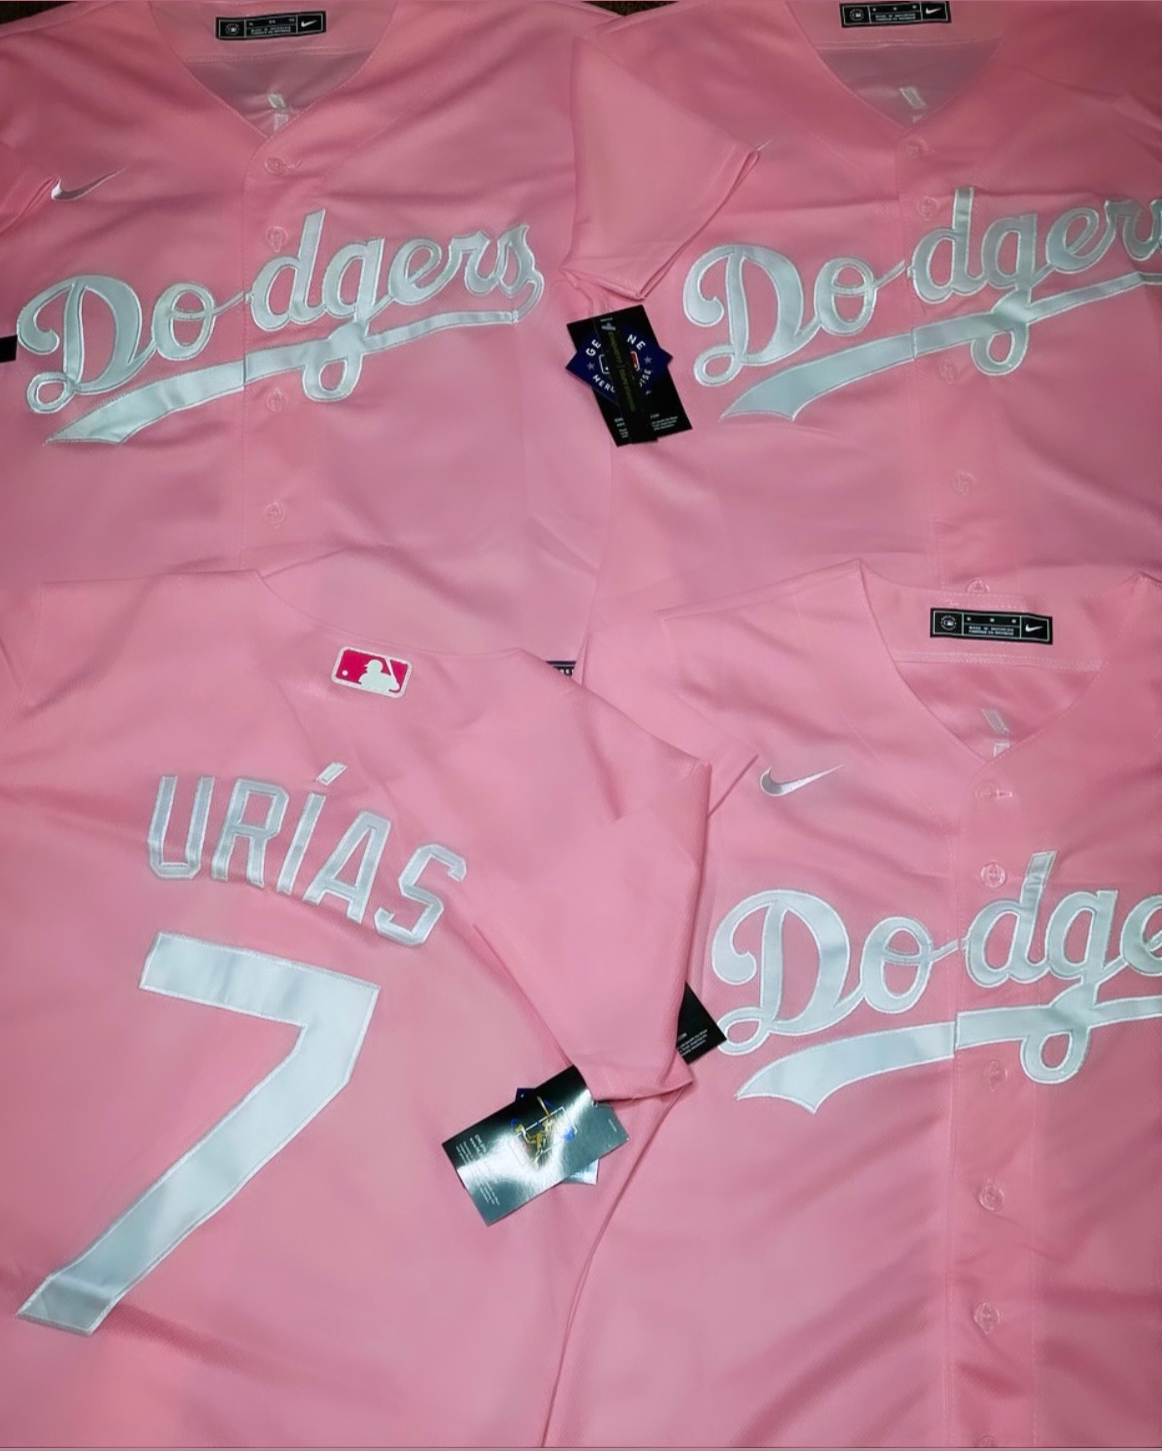 Dodgers Jersey Women 